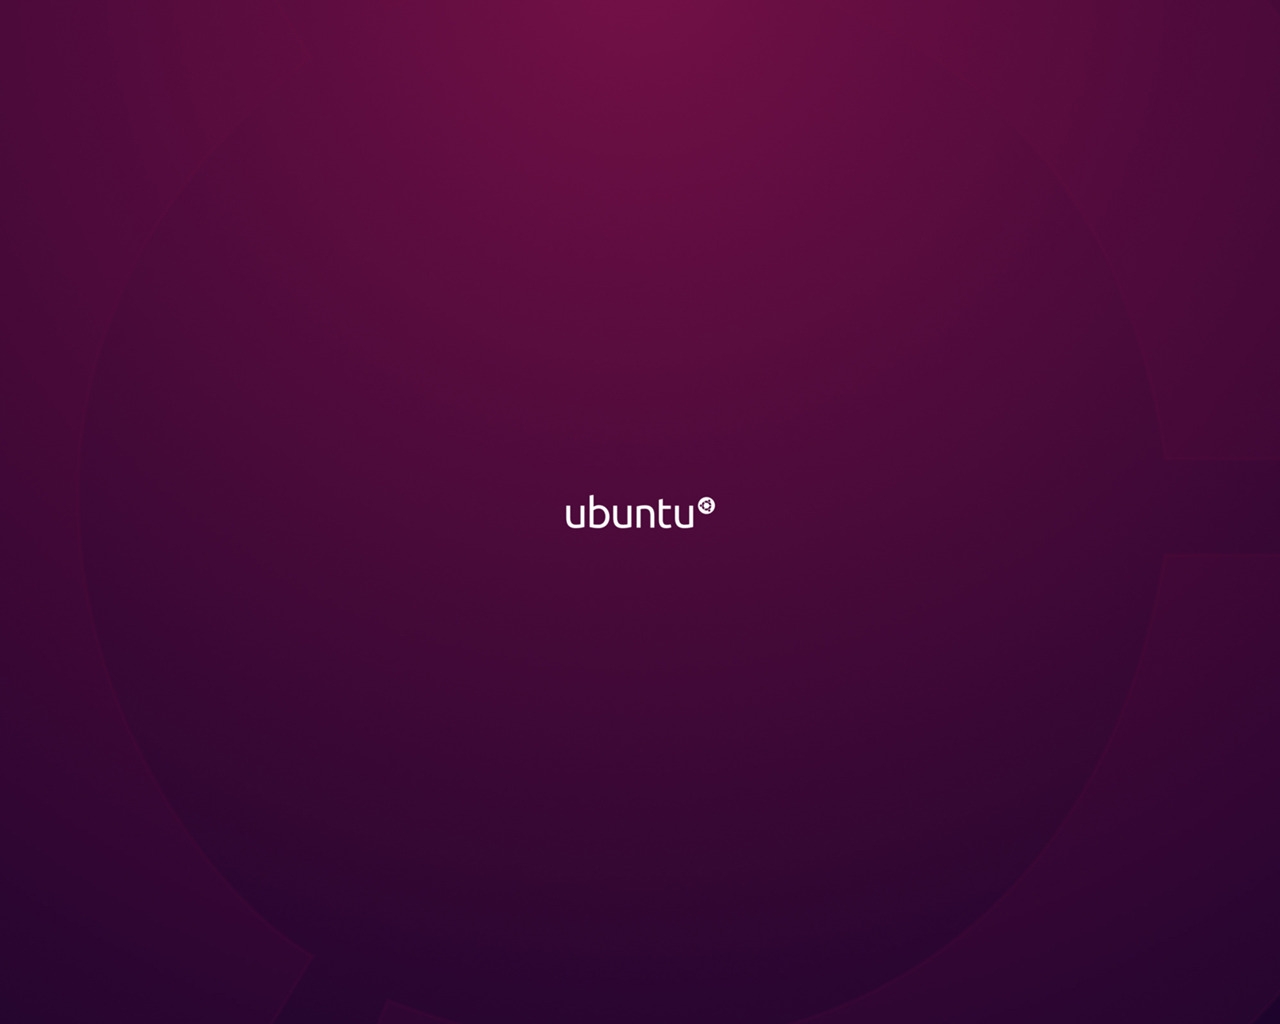 Ubuntu Purple for 1280 x 1024 resolution